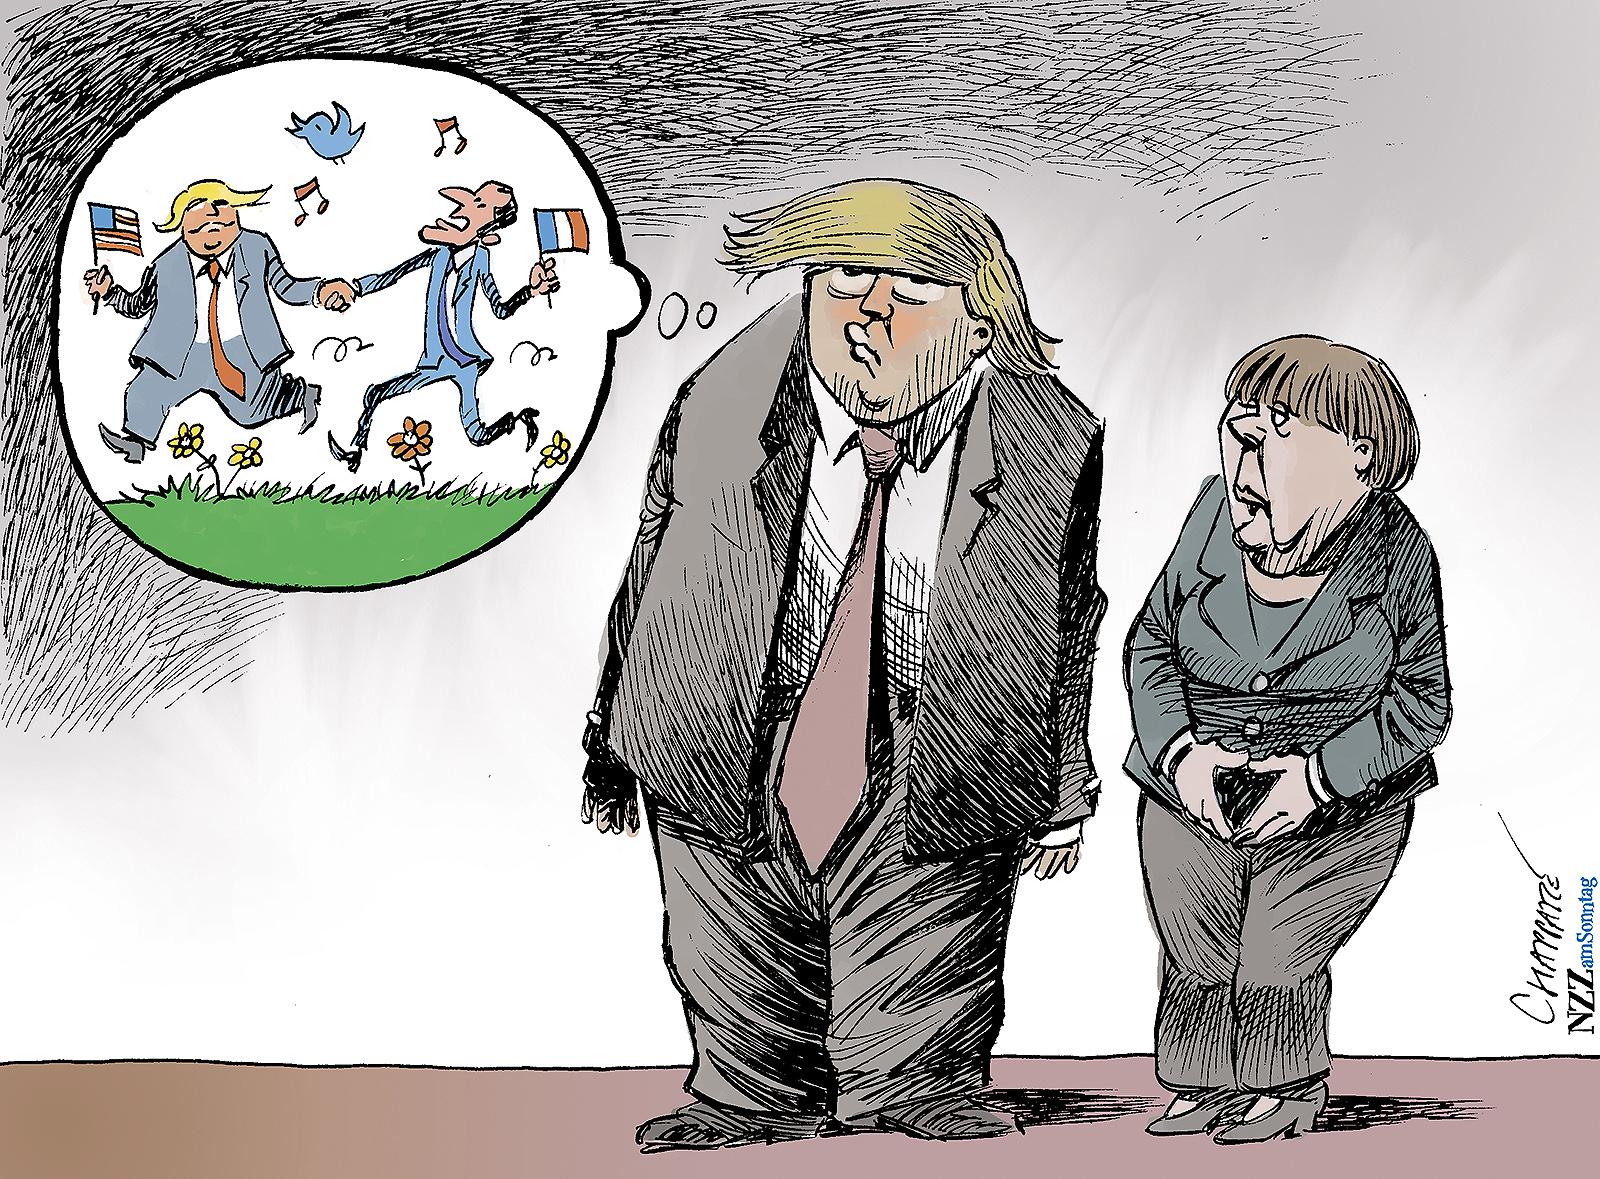 Trump-Merkel meeting